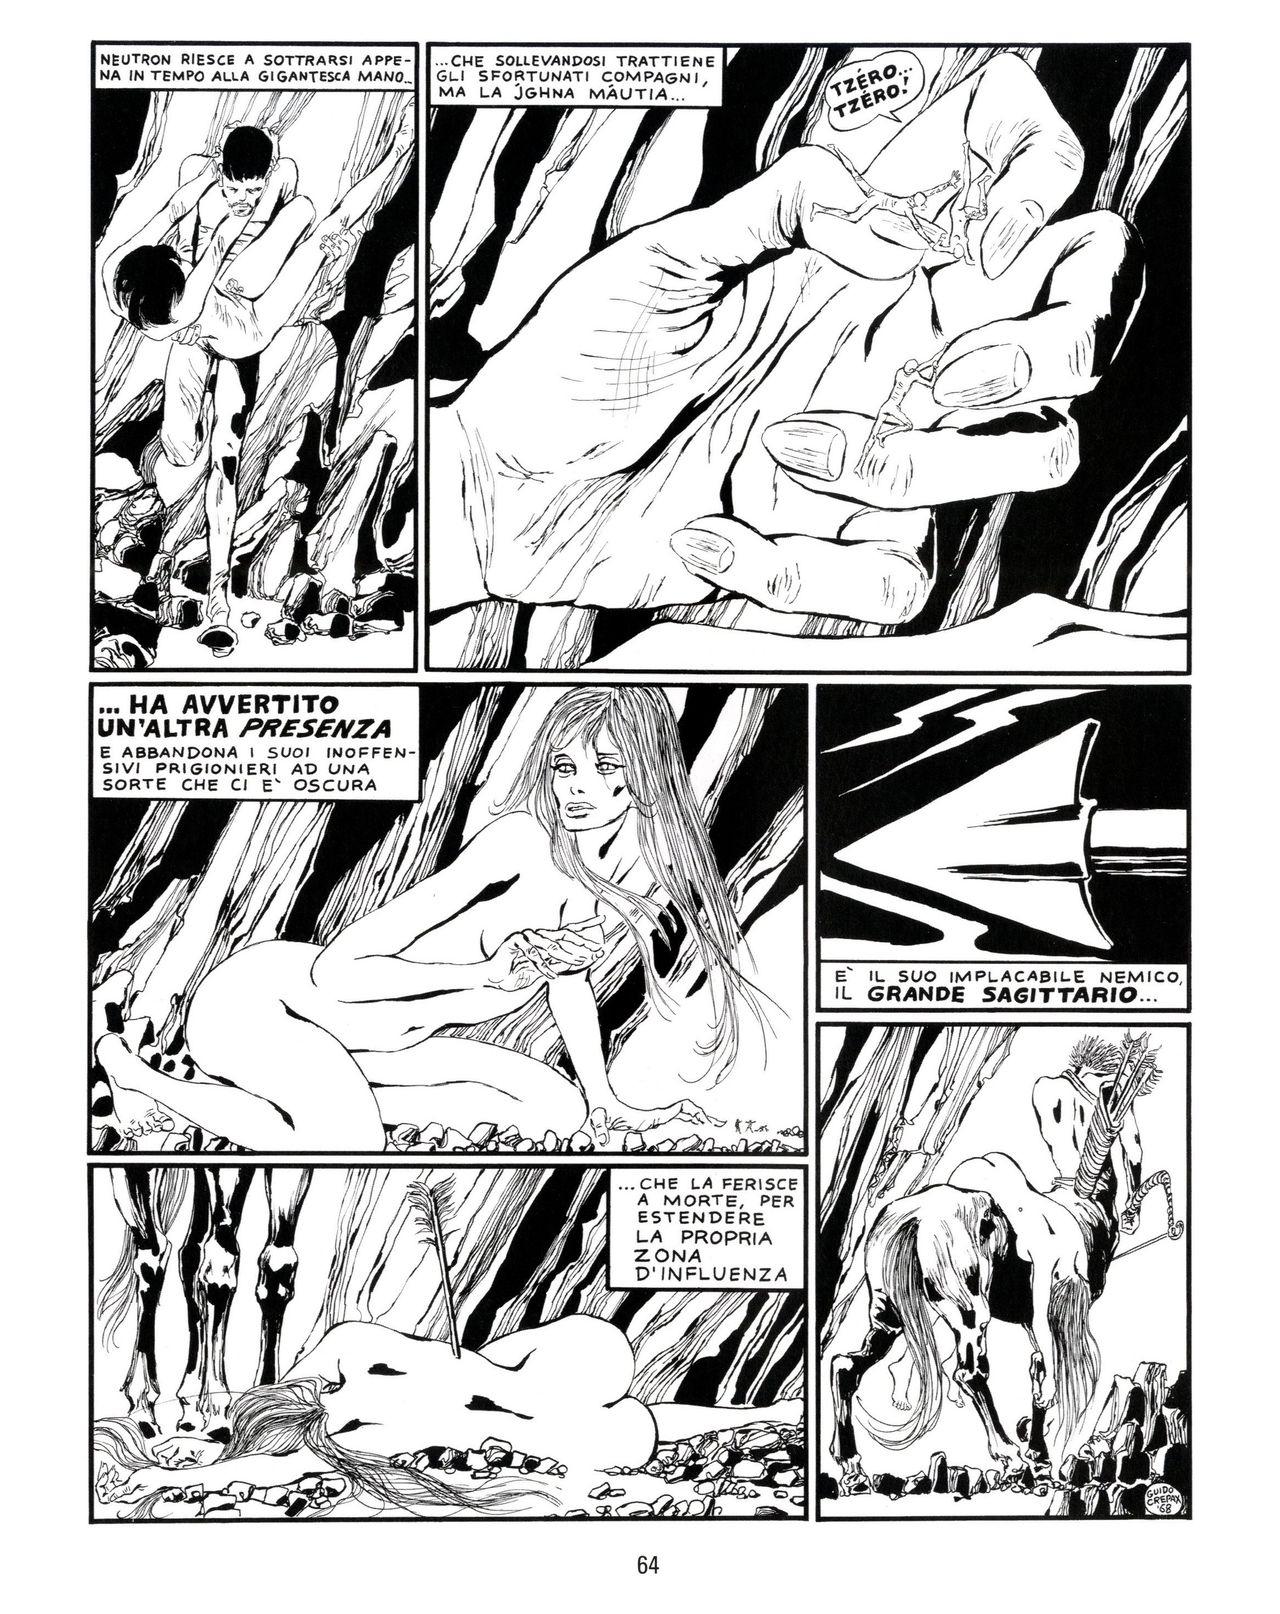 [Guido Crepax] Erotica Fumetti #25 : L'ascesa dei sotterranei : I cavalieri ciechi [Italian] 65